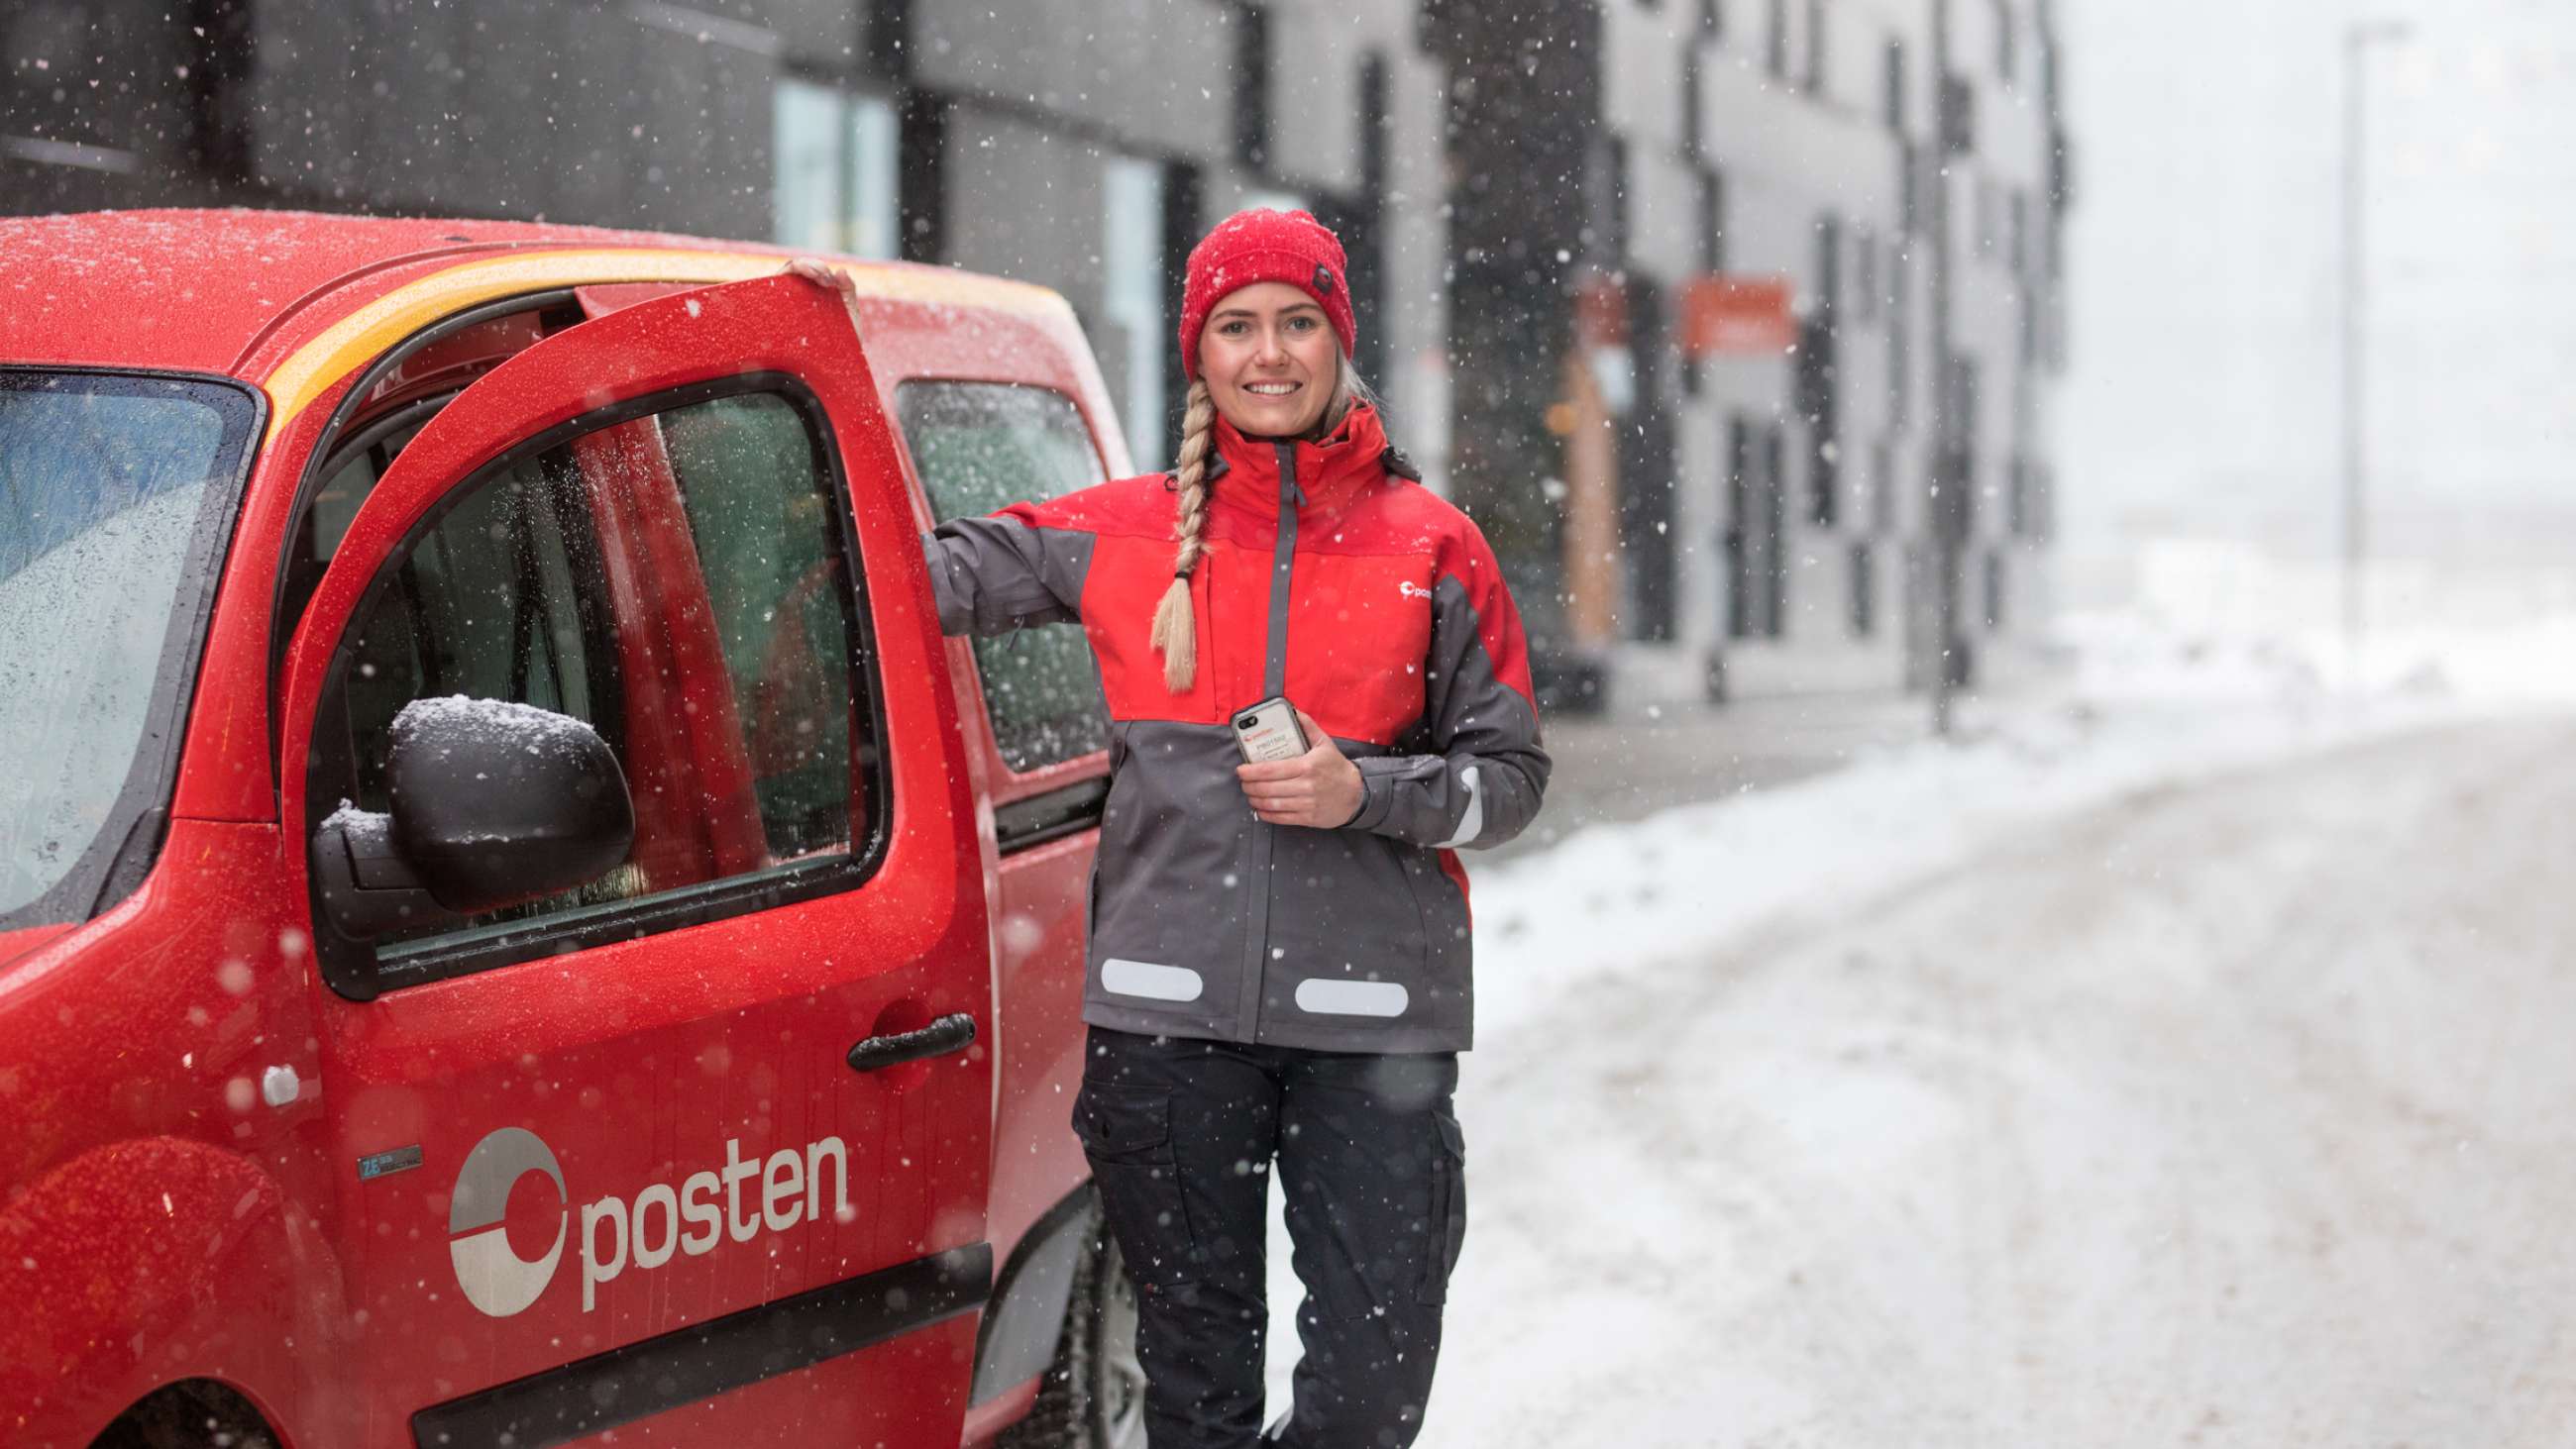 Posten Bring worker in the snow